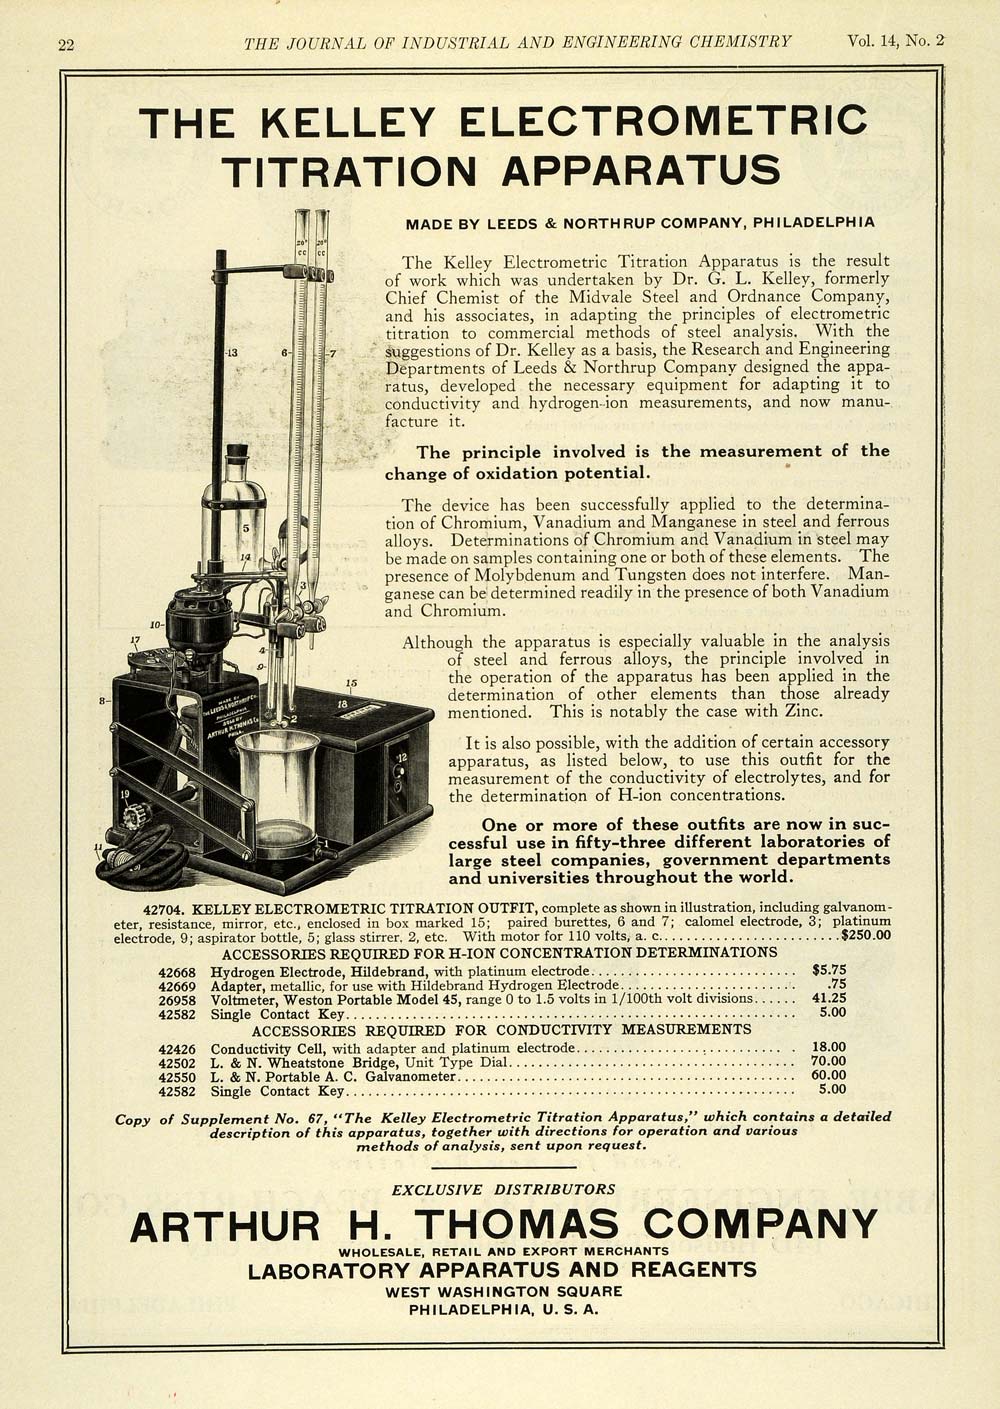 1922 Ad Kelley Electrometric Titration Apparatus Outfit Arthur H. Thomas IEC1